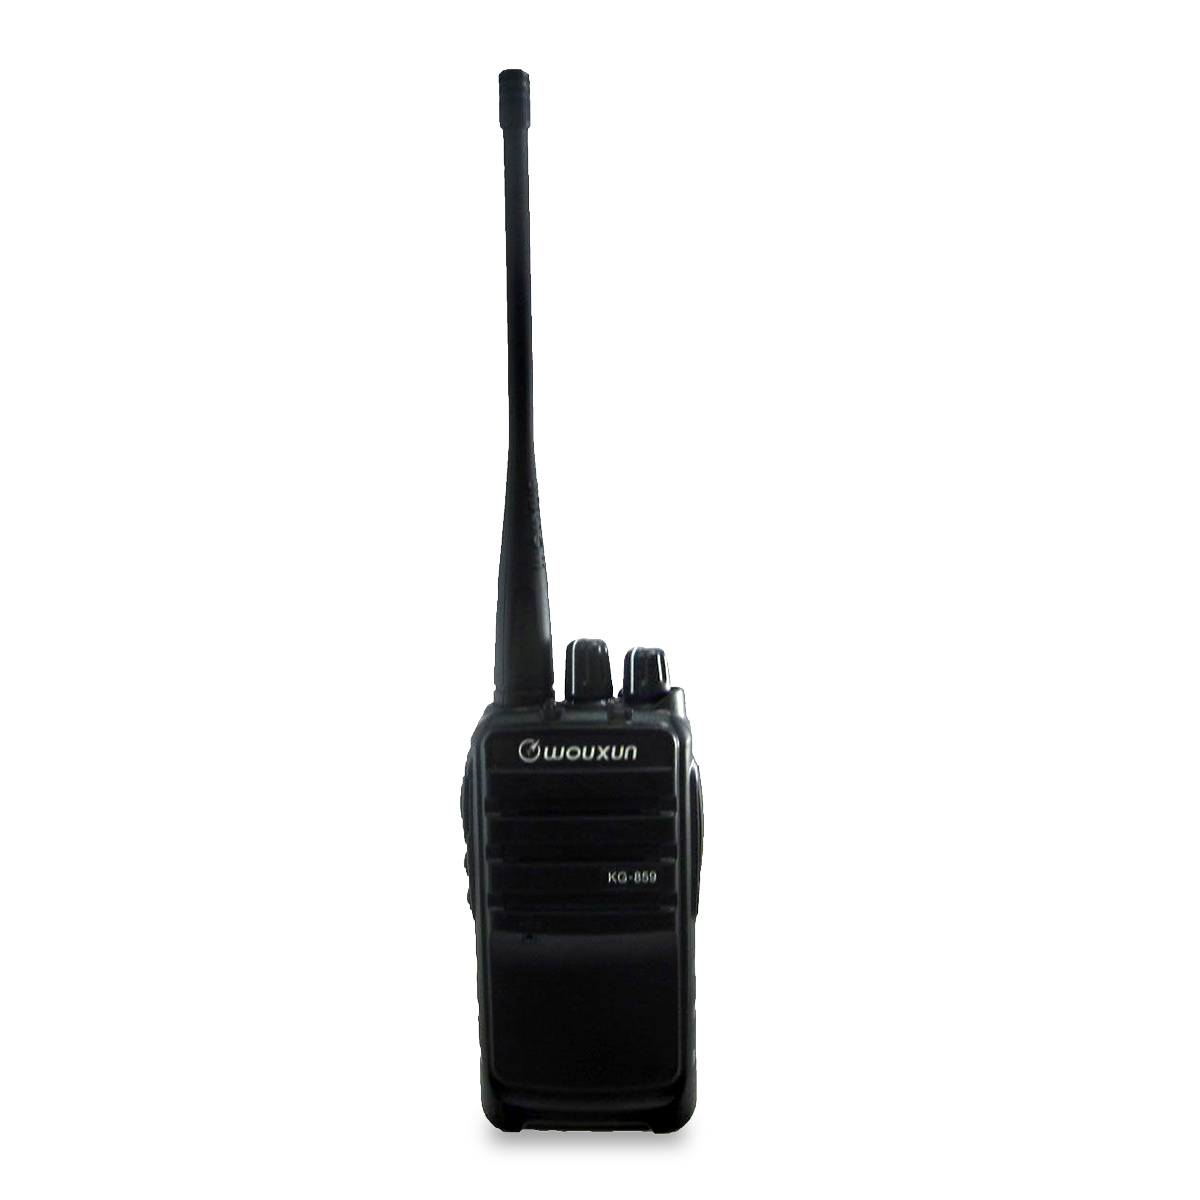 Radio Wouxun KG-859 Analógico UHF 450-520 MHz